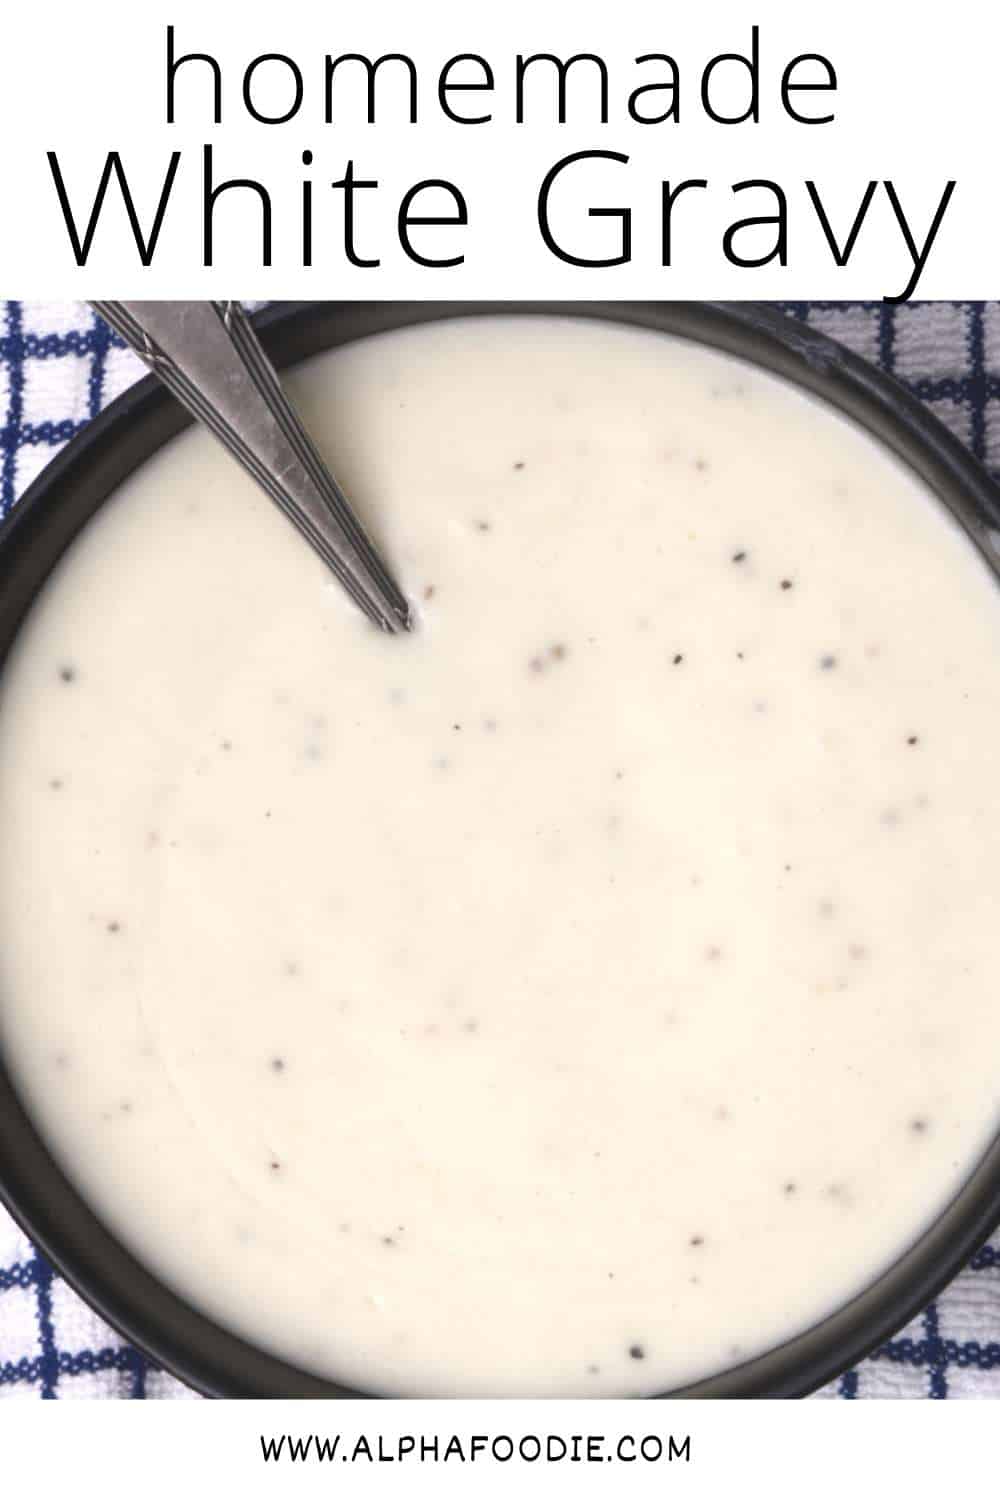 Homemade White Gravy - Alphafoodie